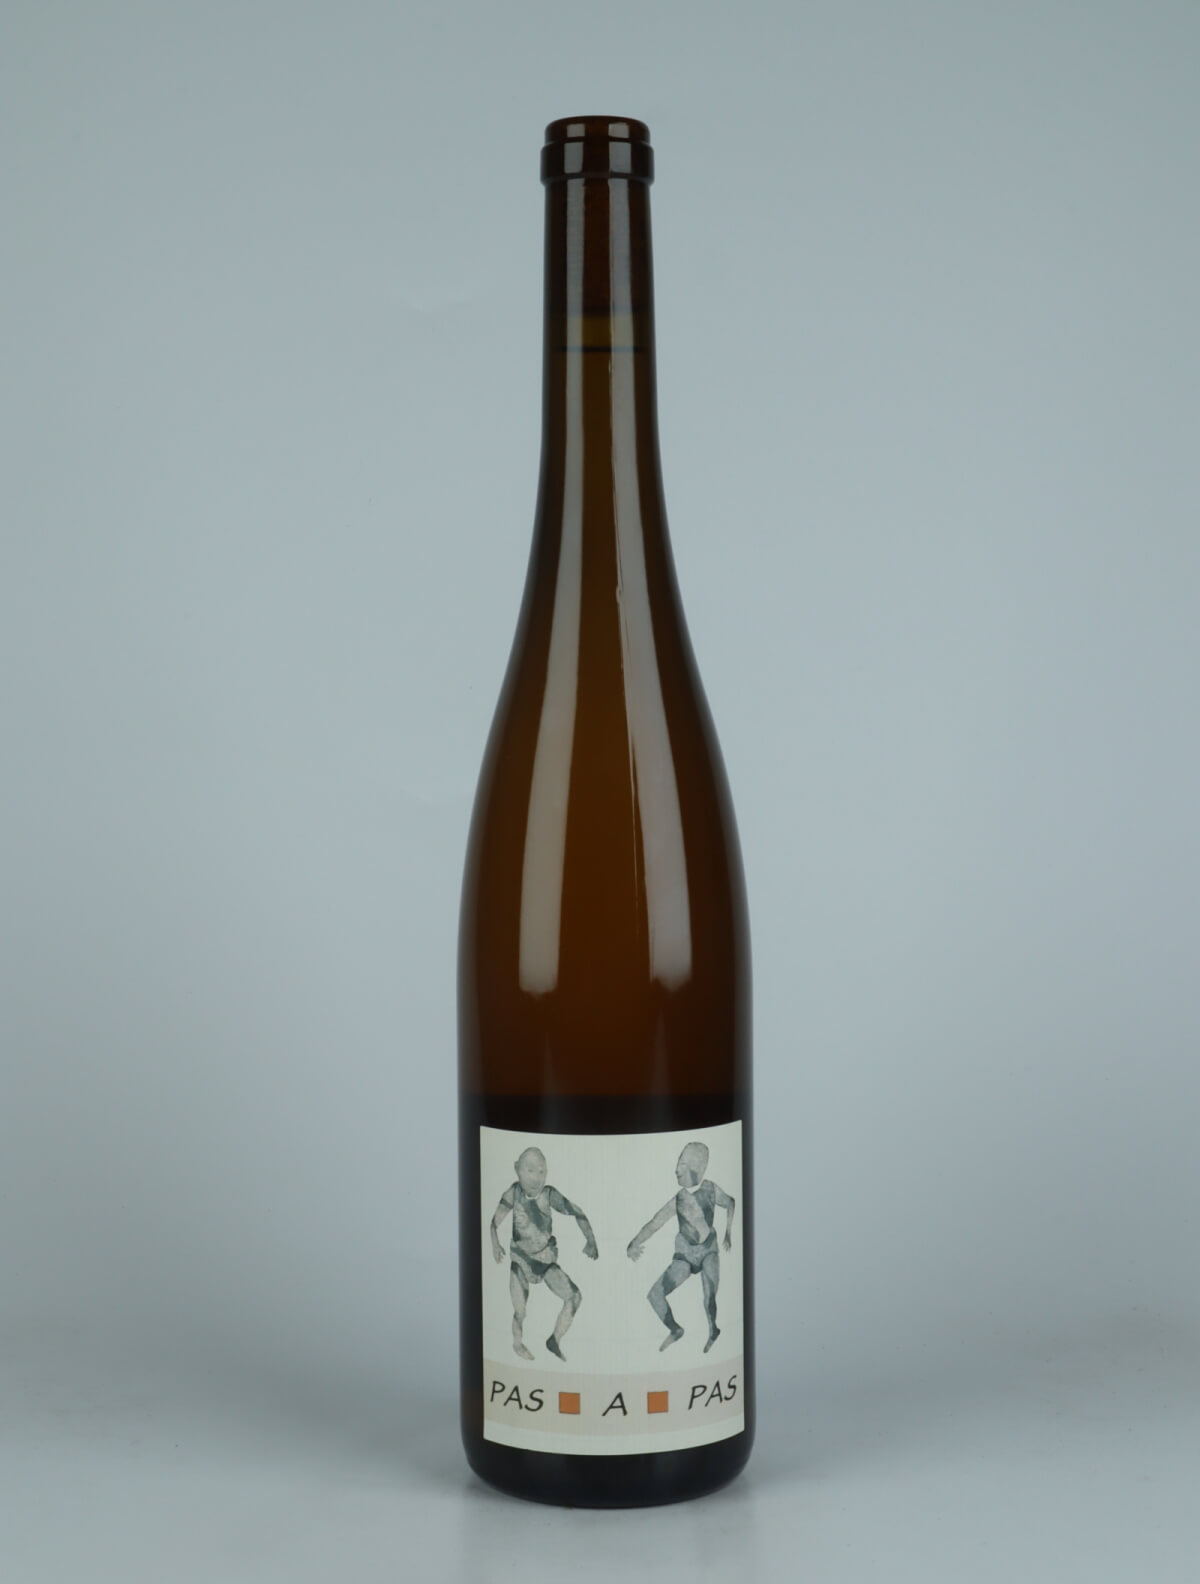 En flaske 2021 Pas a Pas Hvidvin fra Domaine Rietsch, Alsace i Frankrig